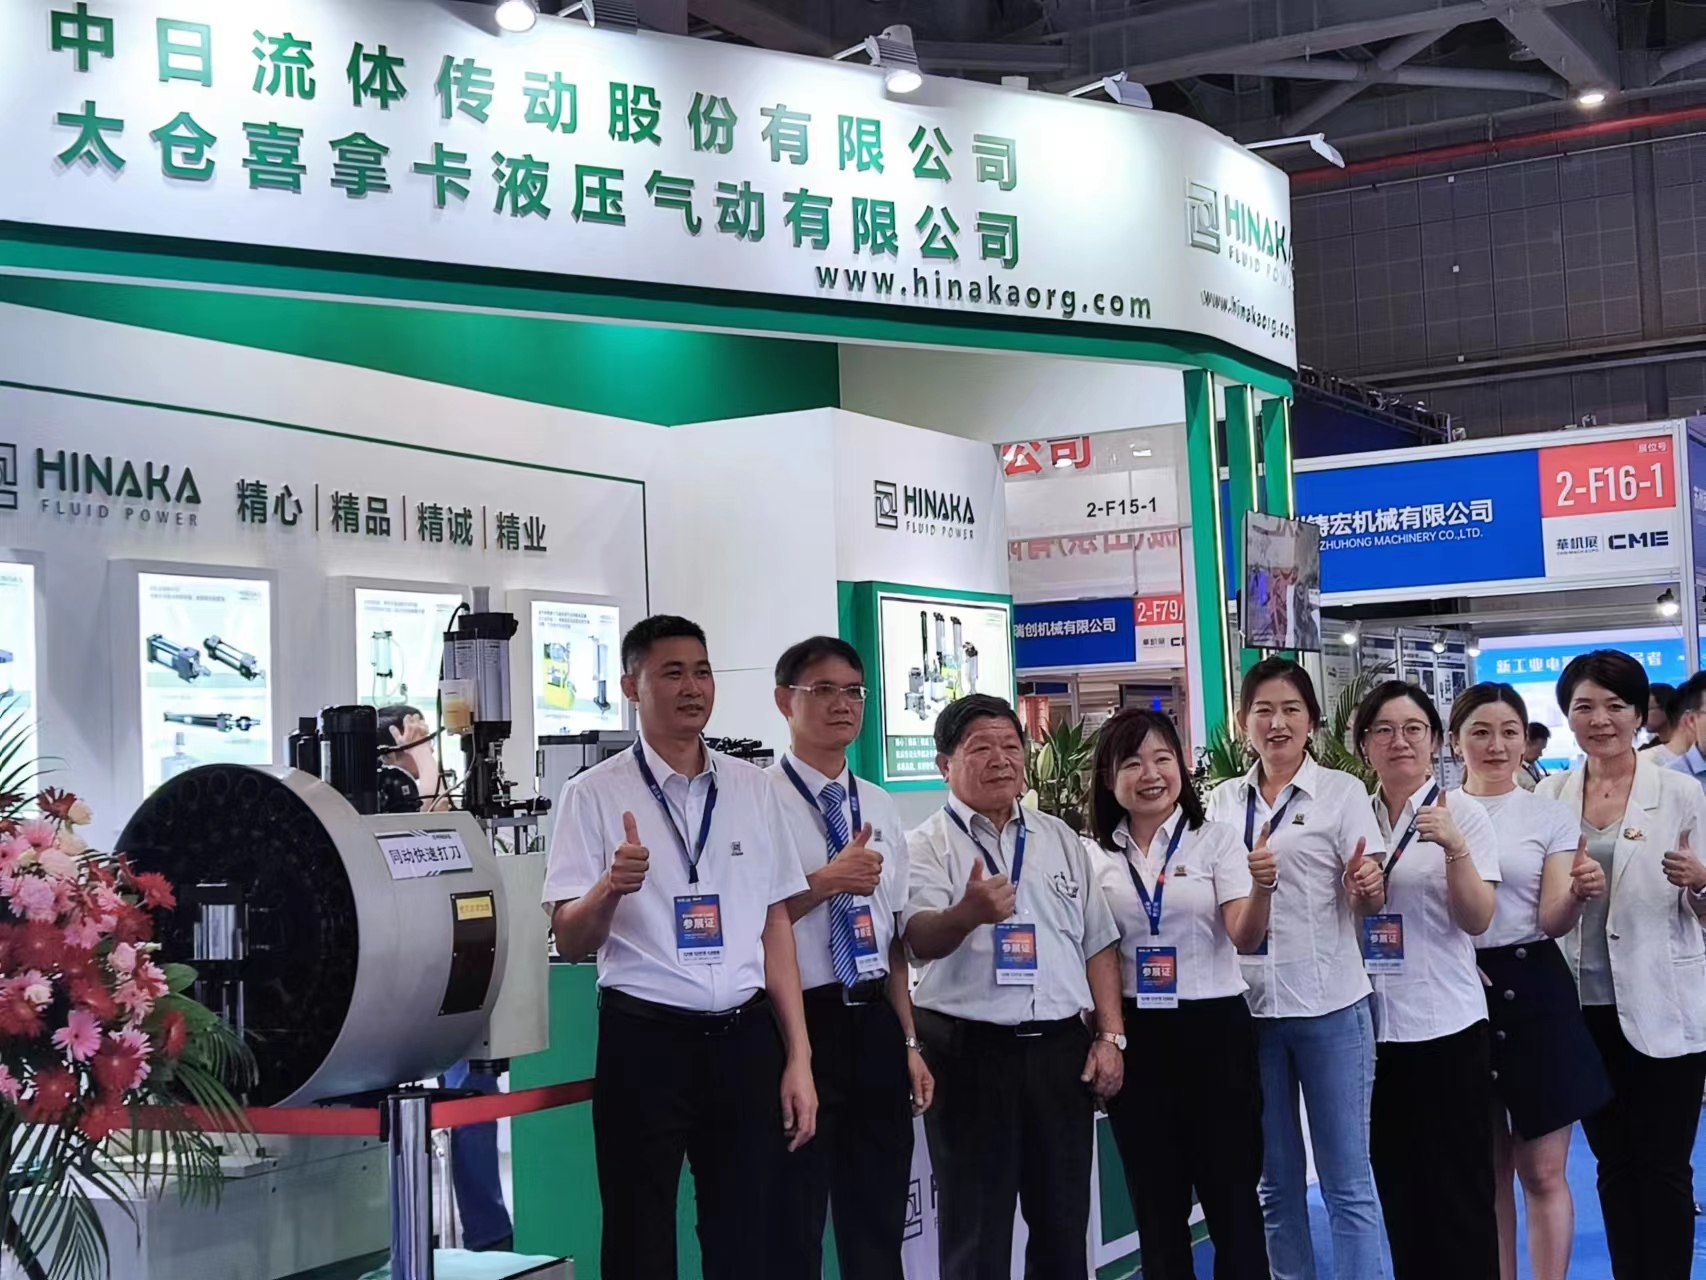 2023 CME Shanghai International Machine Tool Exhibition - A Great Success